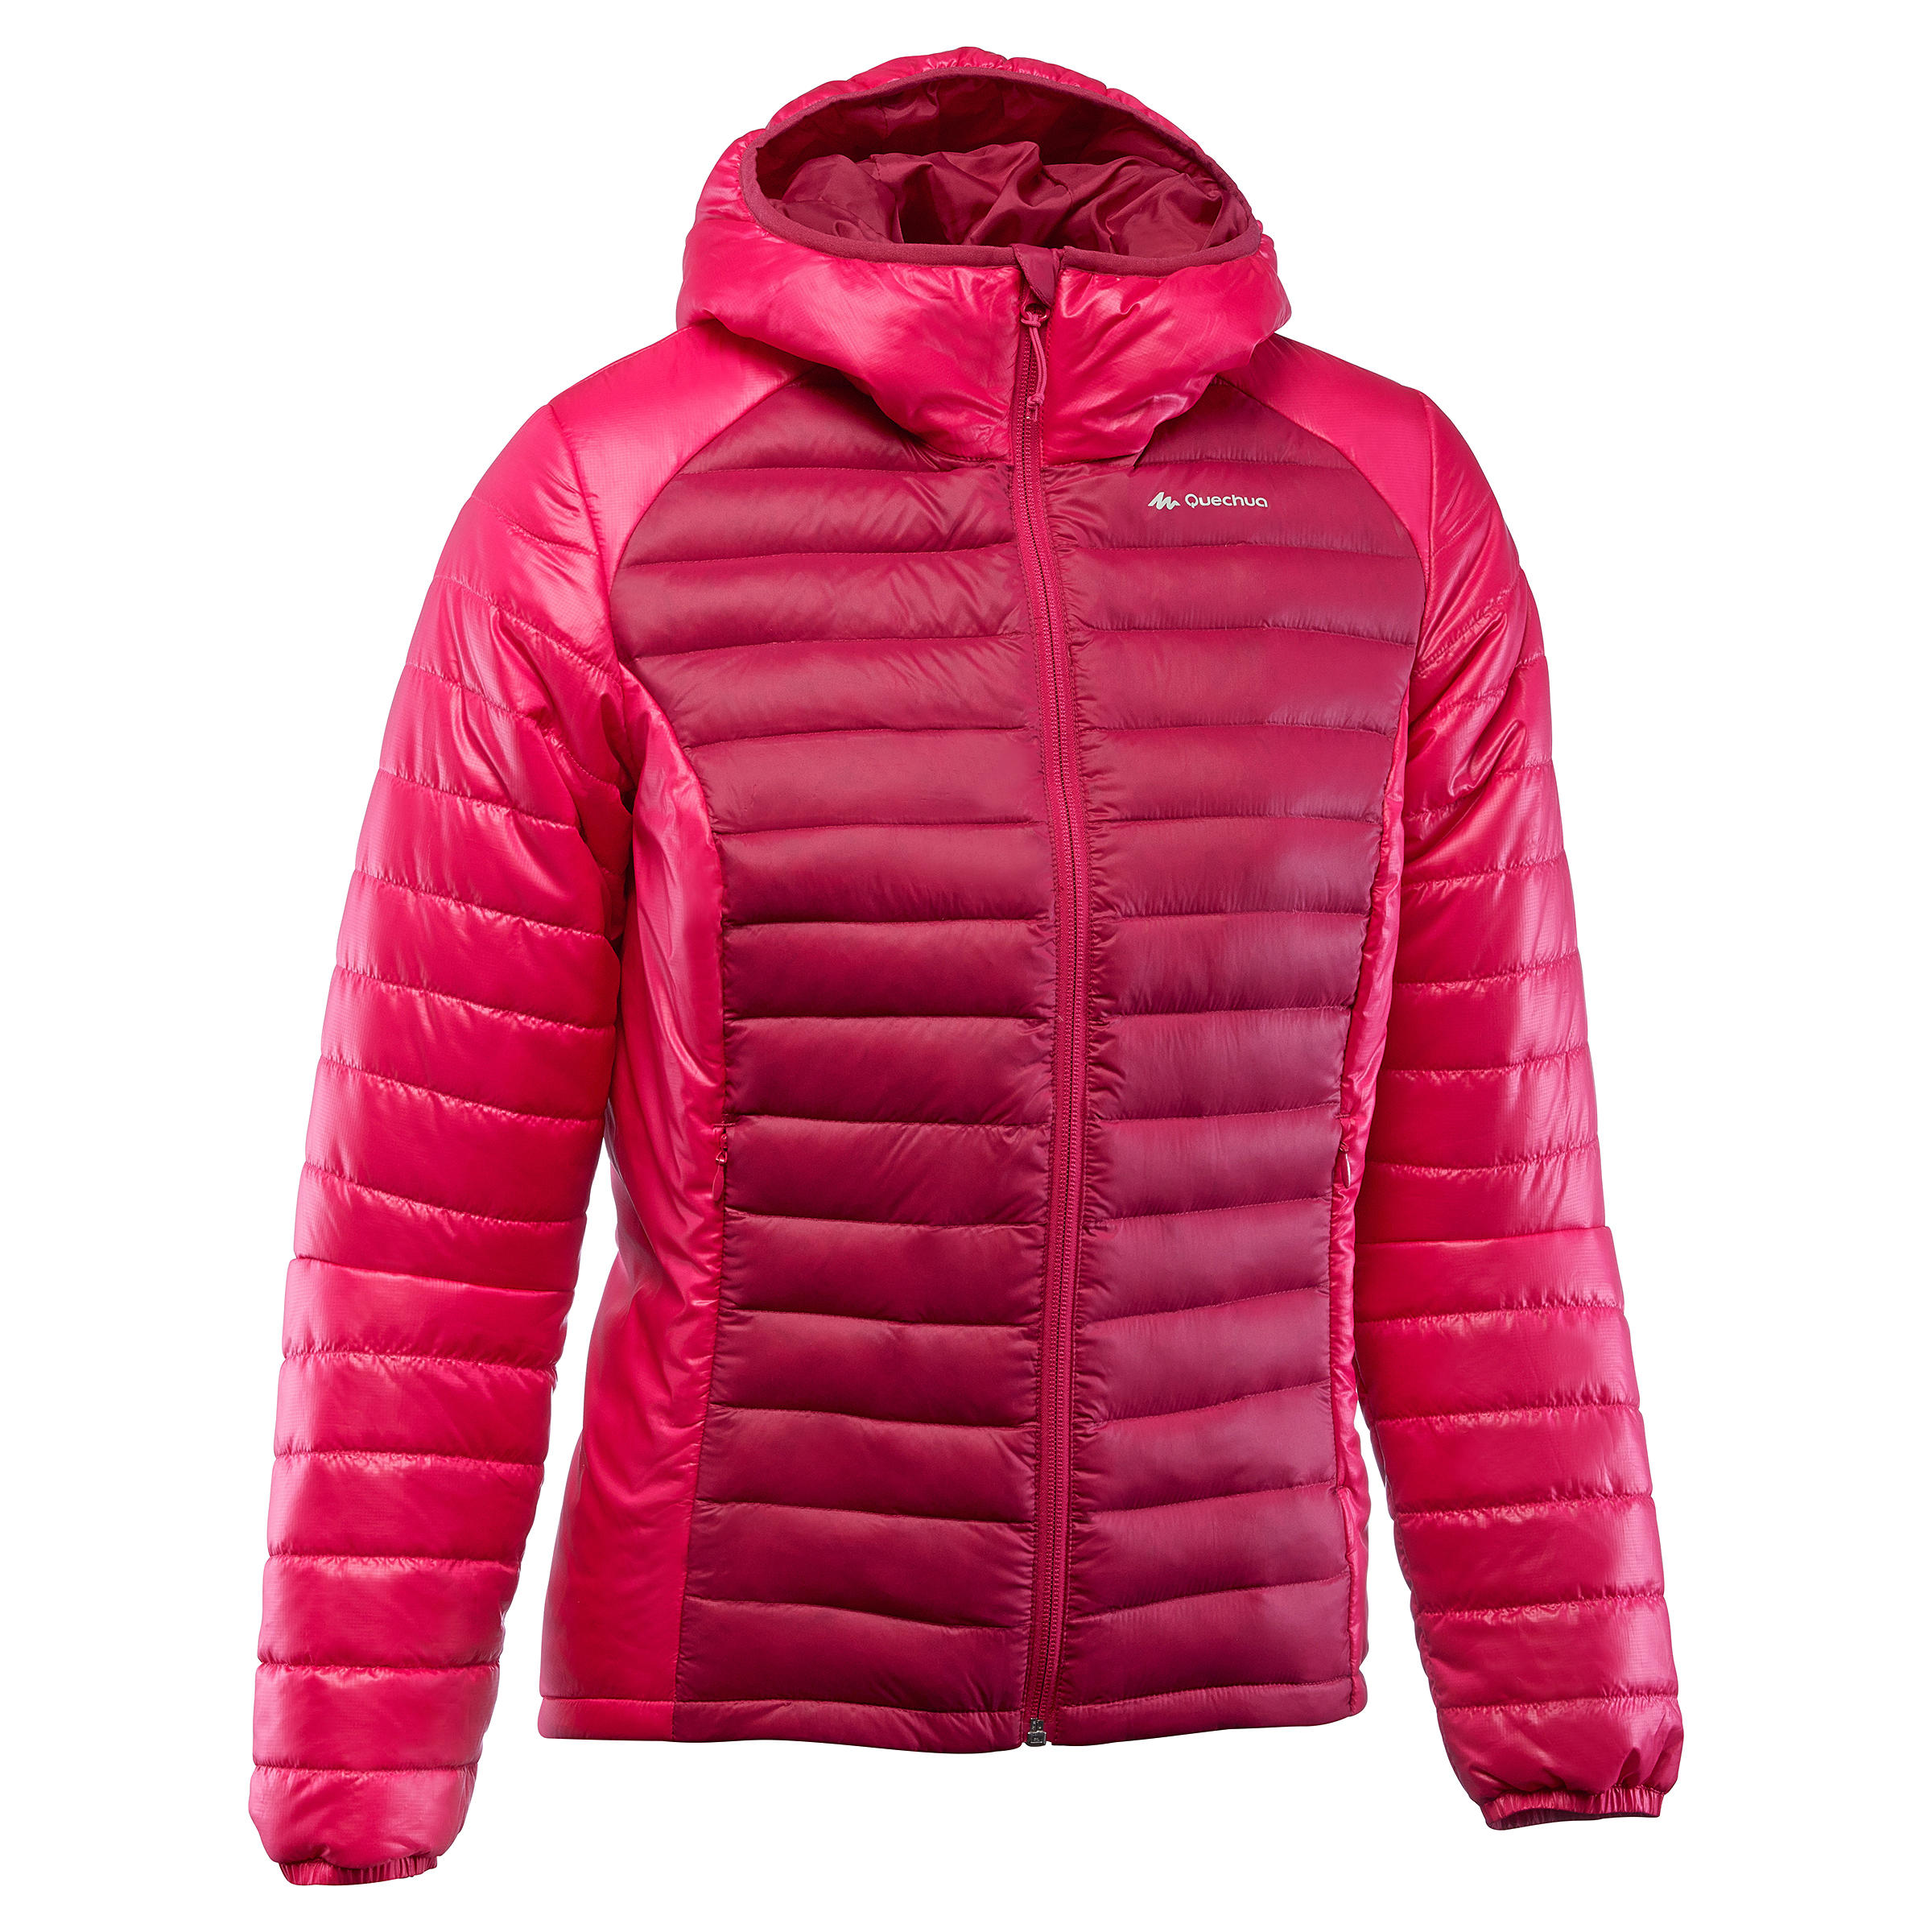 X-Light 1 Woman's Padded Hiking Jacket - Pink 1/17